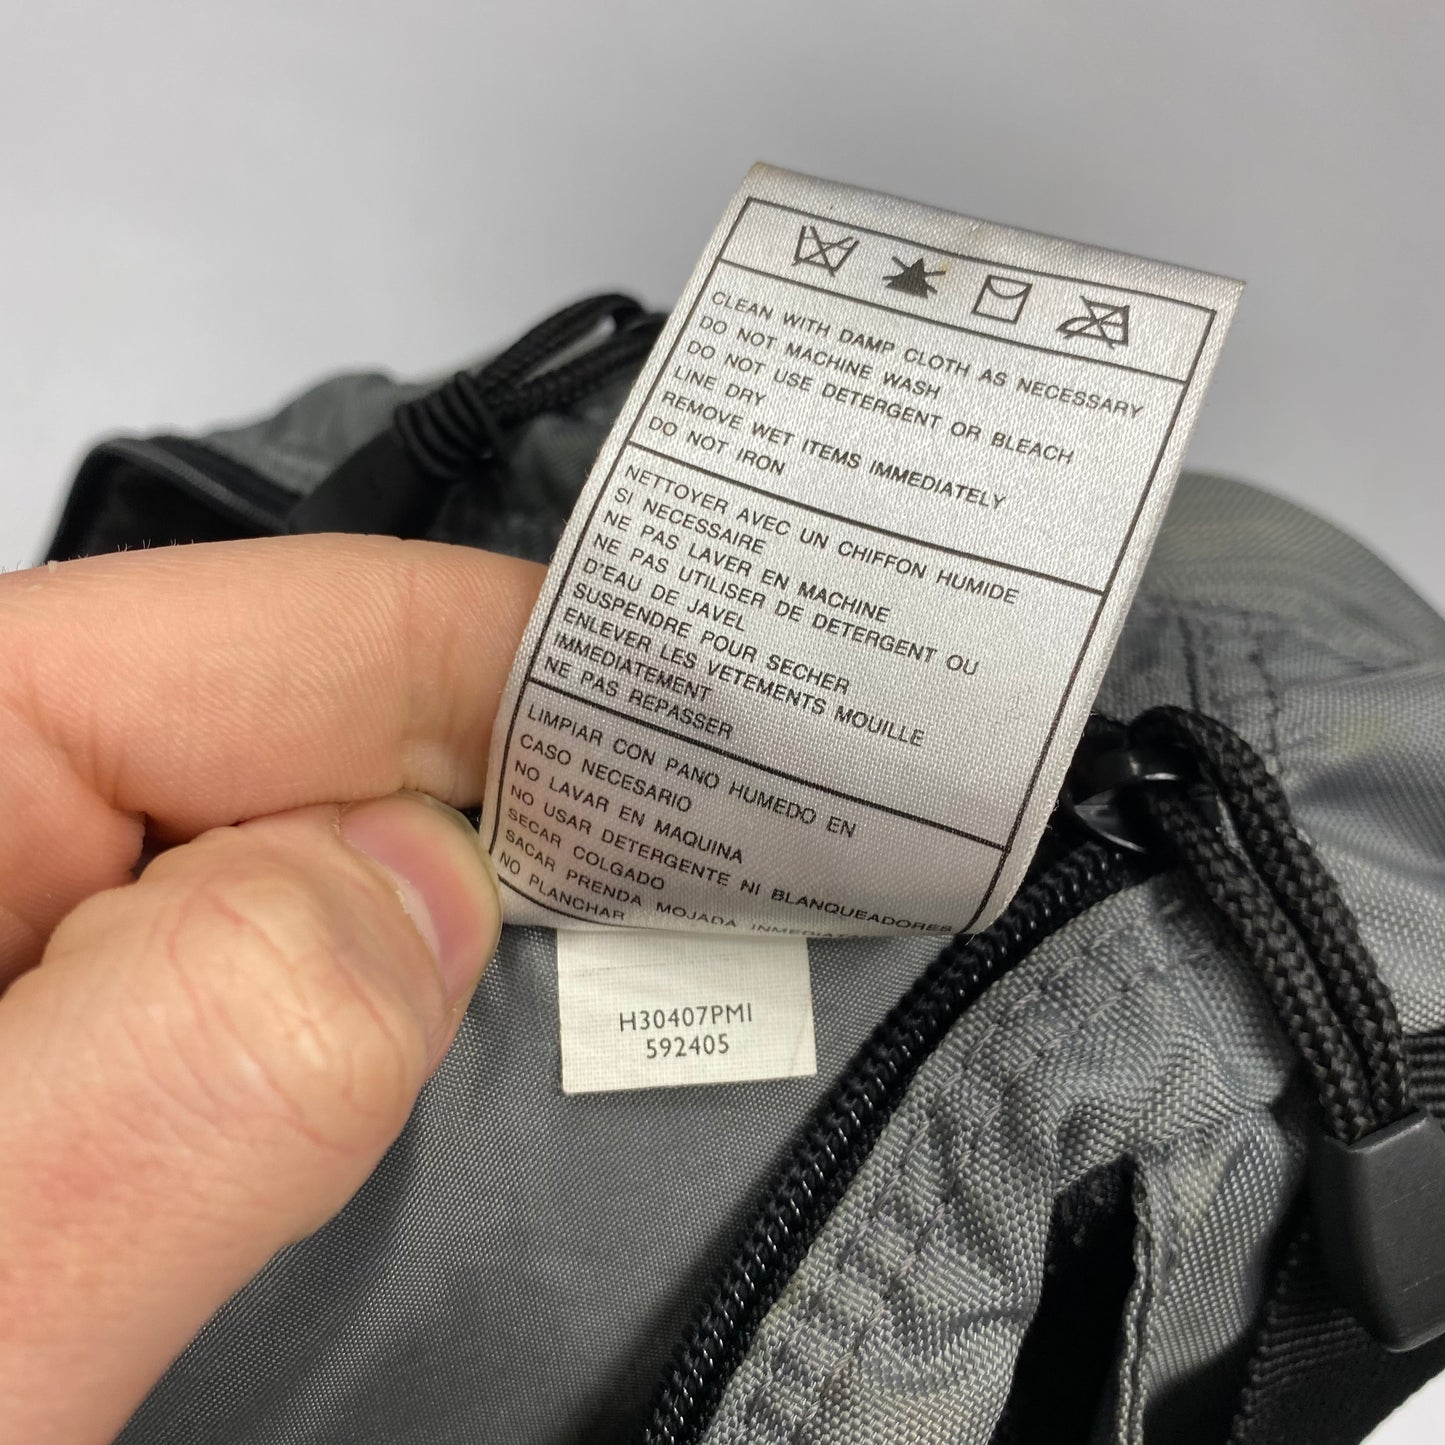 Nike 2003 2 in 1 nylon silver textured slingbag